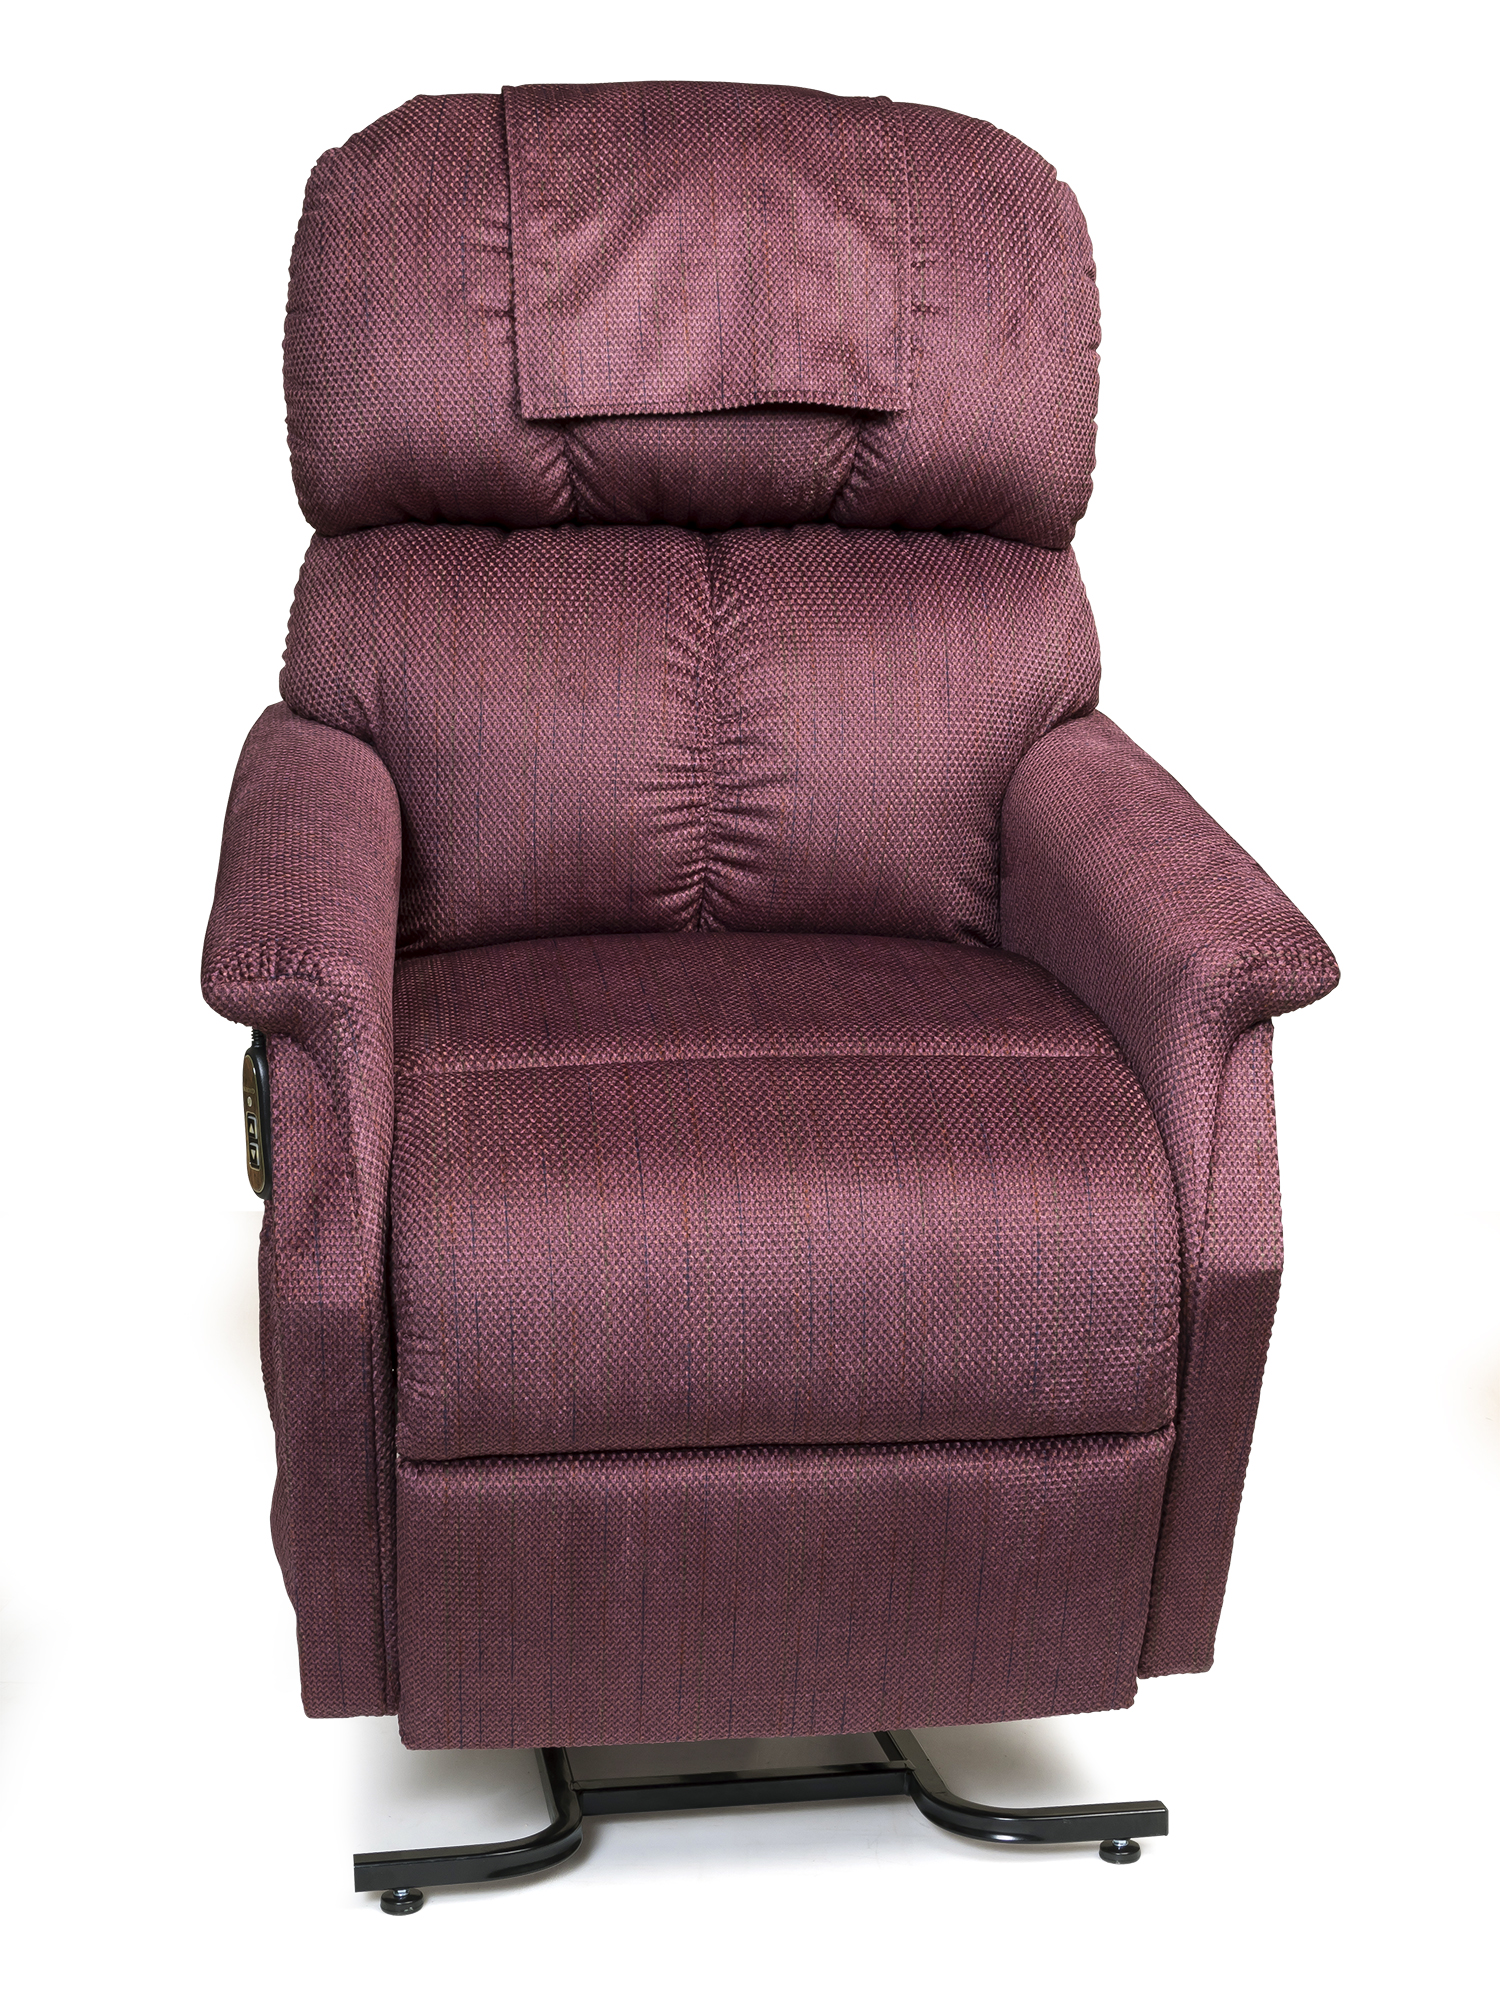 Photo of Golden Technologies Comforter Lift Chair, Size Wide Tall